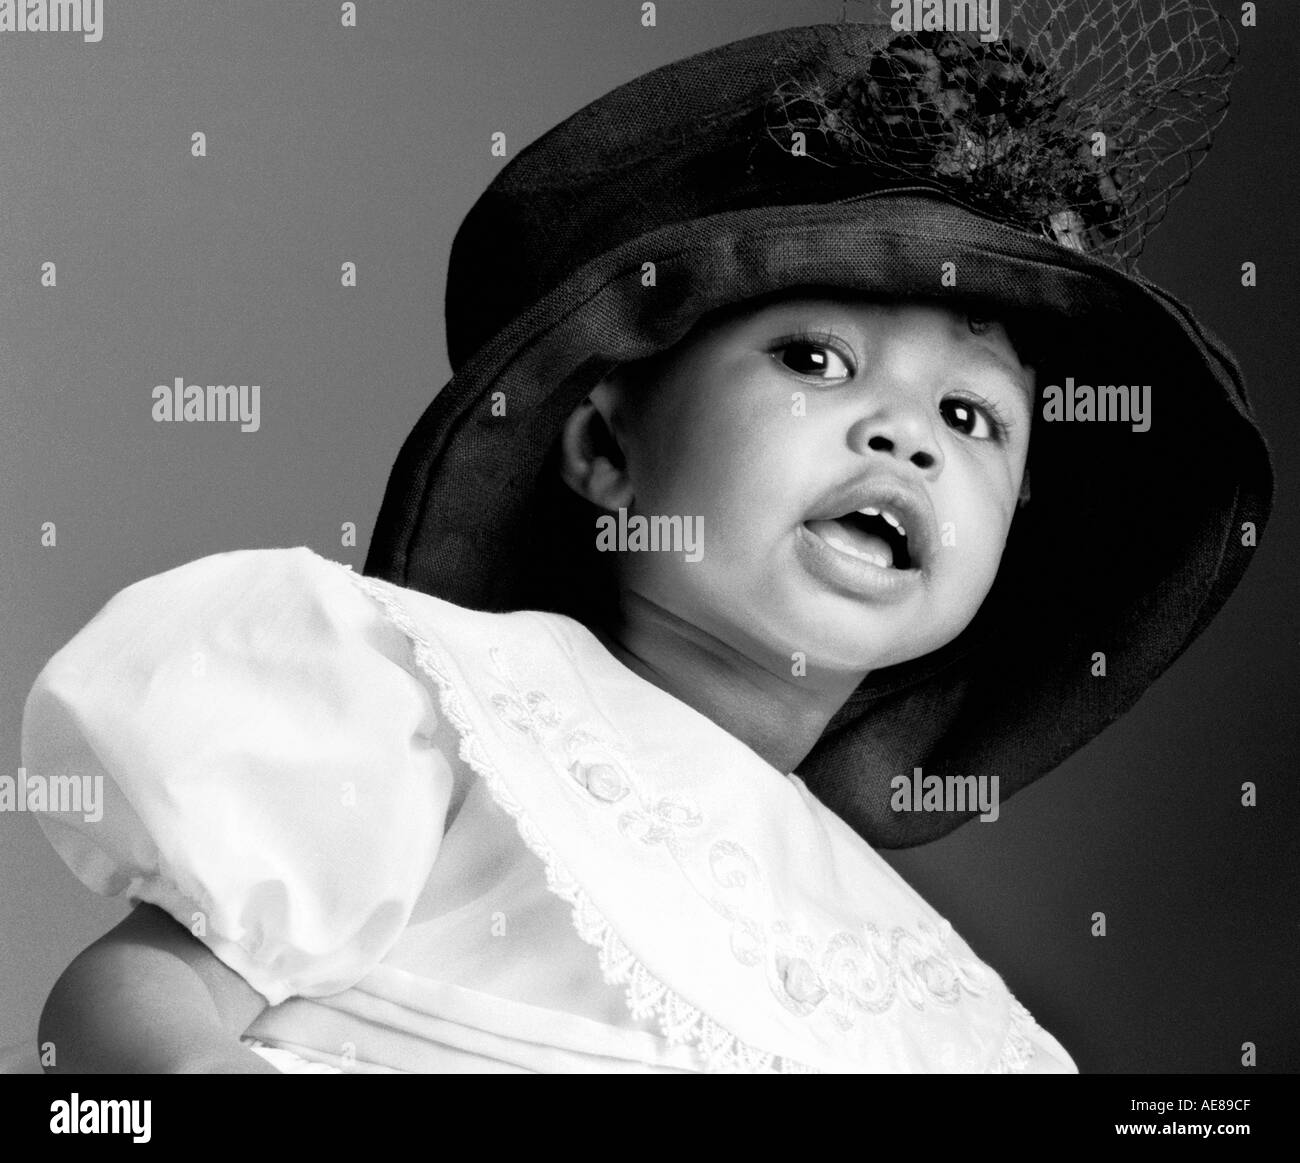 Baby In Black Hat Crown Baby Bonnet Headdress child children Black White African American Girl Age 2-4 Stock Photo